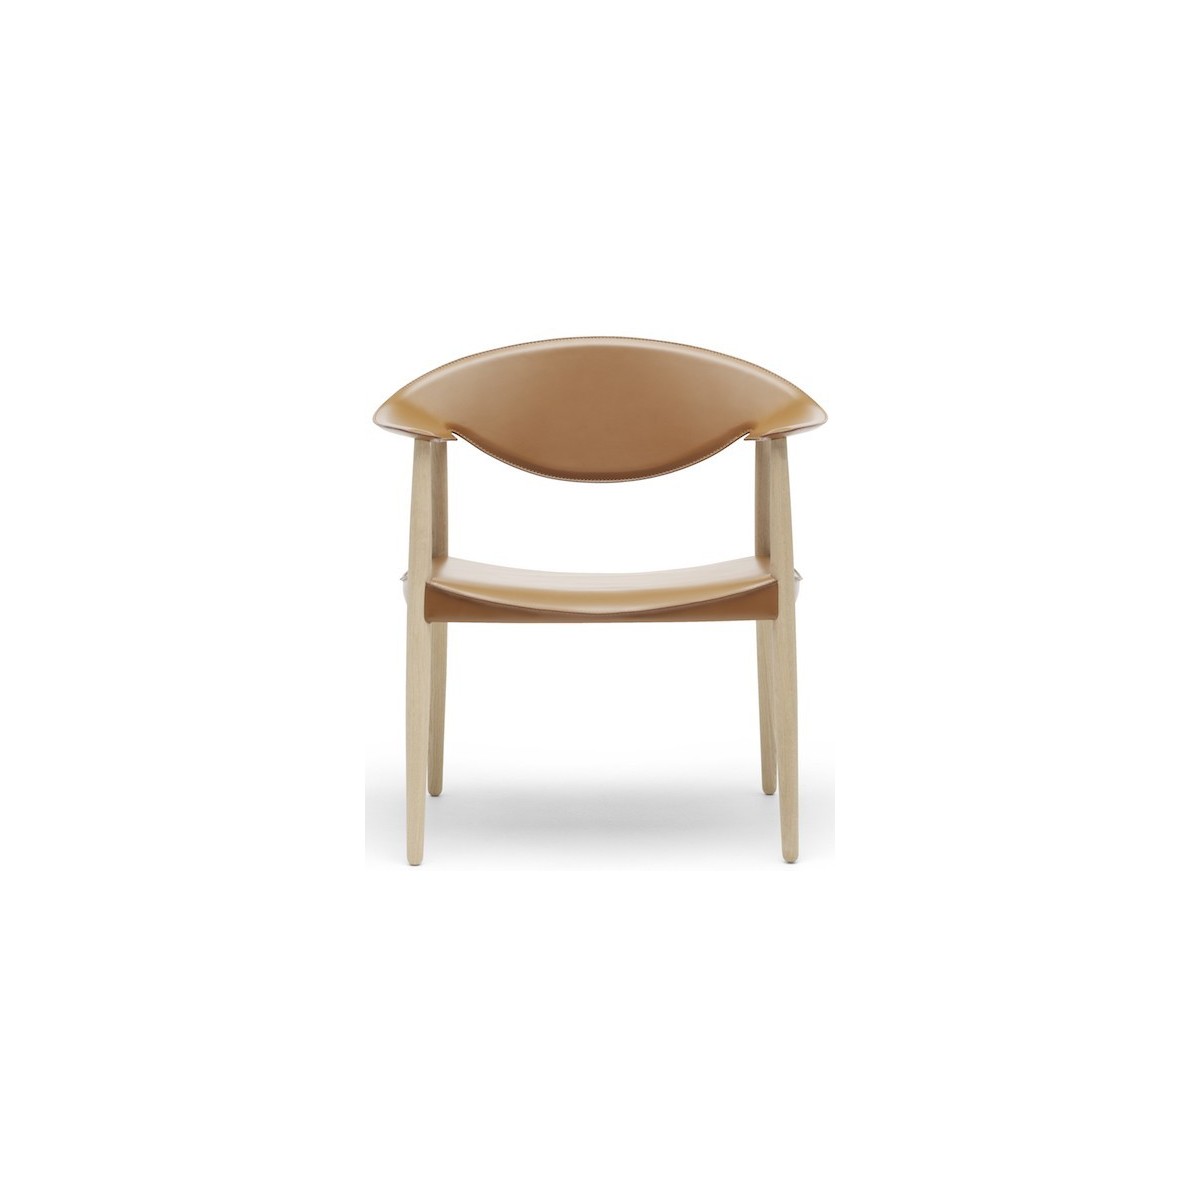 oiled oak + natural leather - Metropolitan LM92P chair